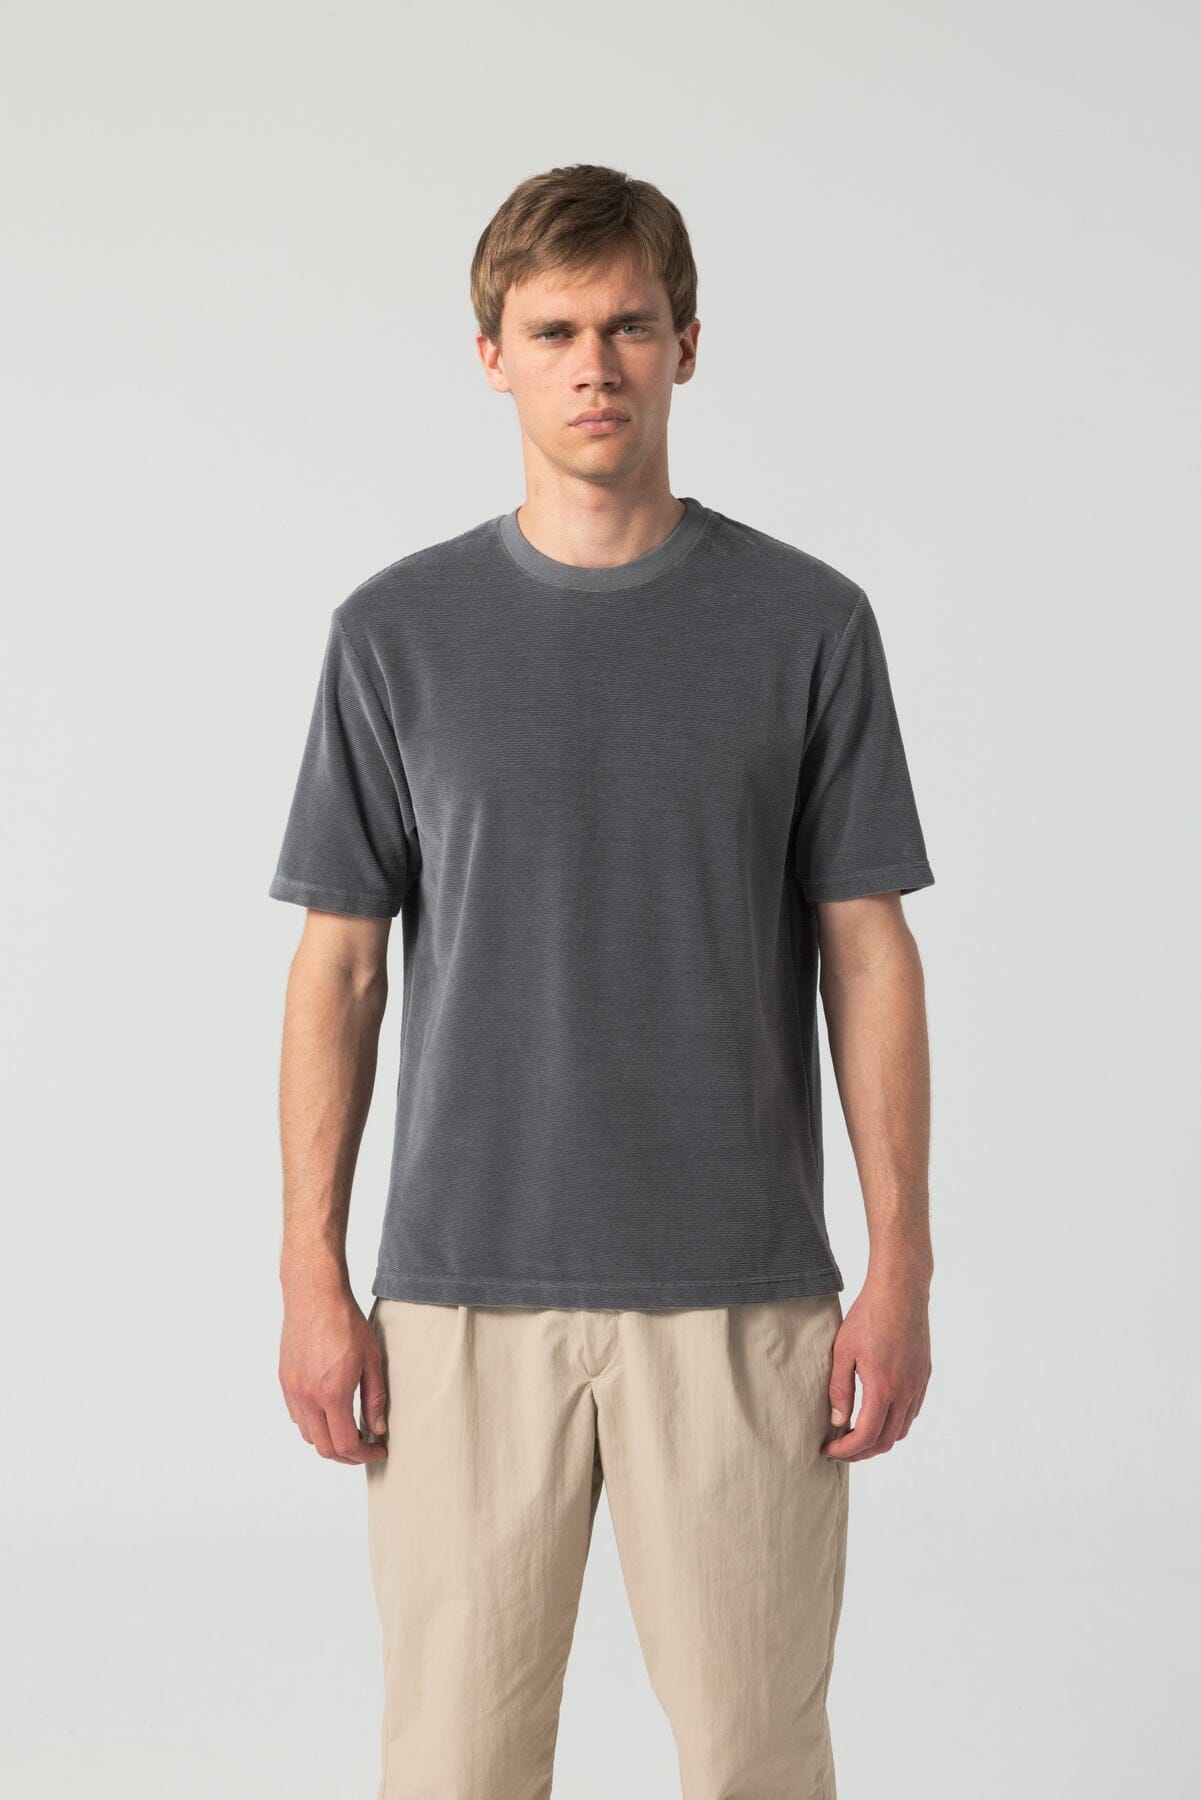 Unfeigned - Basic T-Shirt Velour - Gargoyle - City Workshop Men's Supply Co.